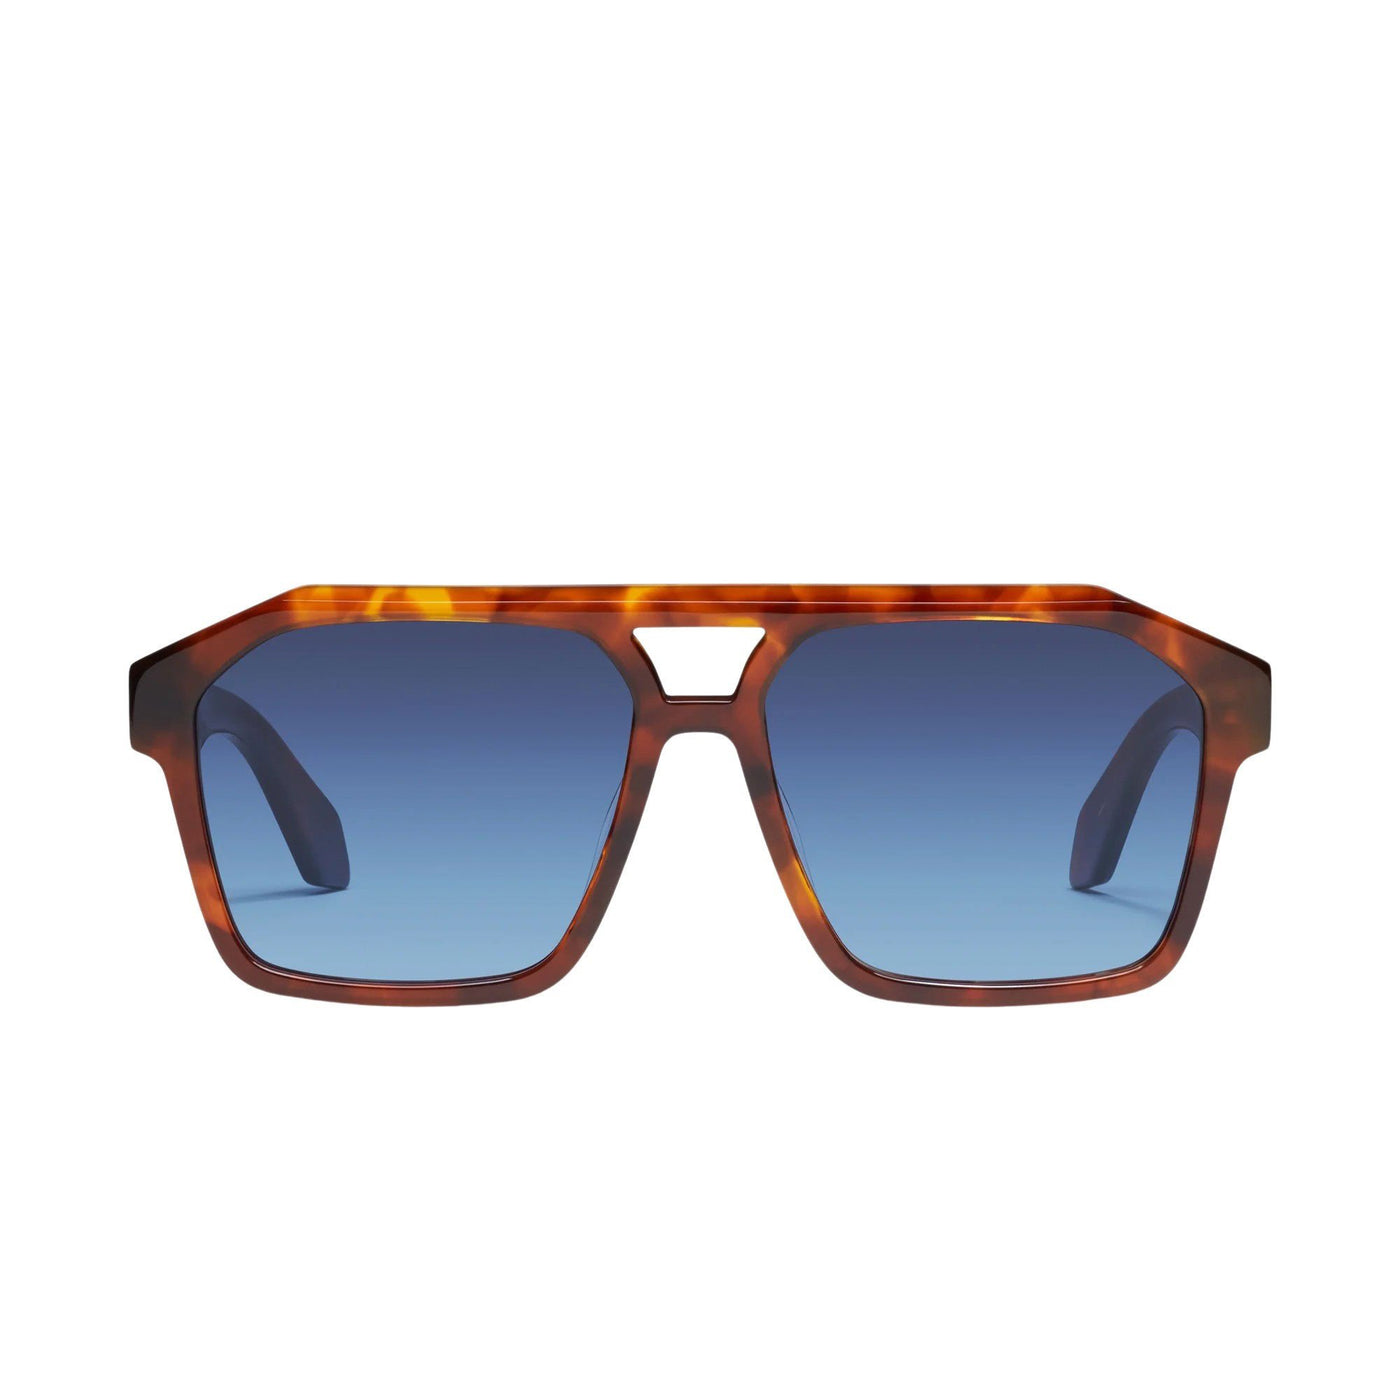 Quay Women's Soundcheck Modern Aviator Sunglasses (Brown Tortoise Frame/Navy to Blue Gradient Lens) - Front View